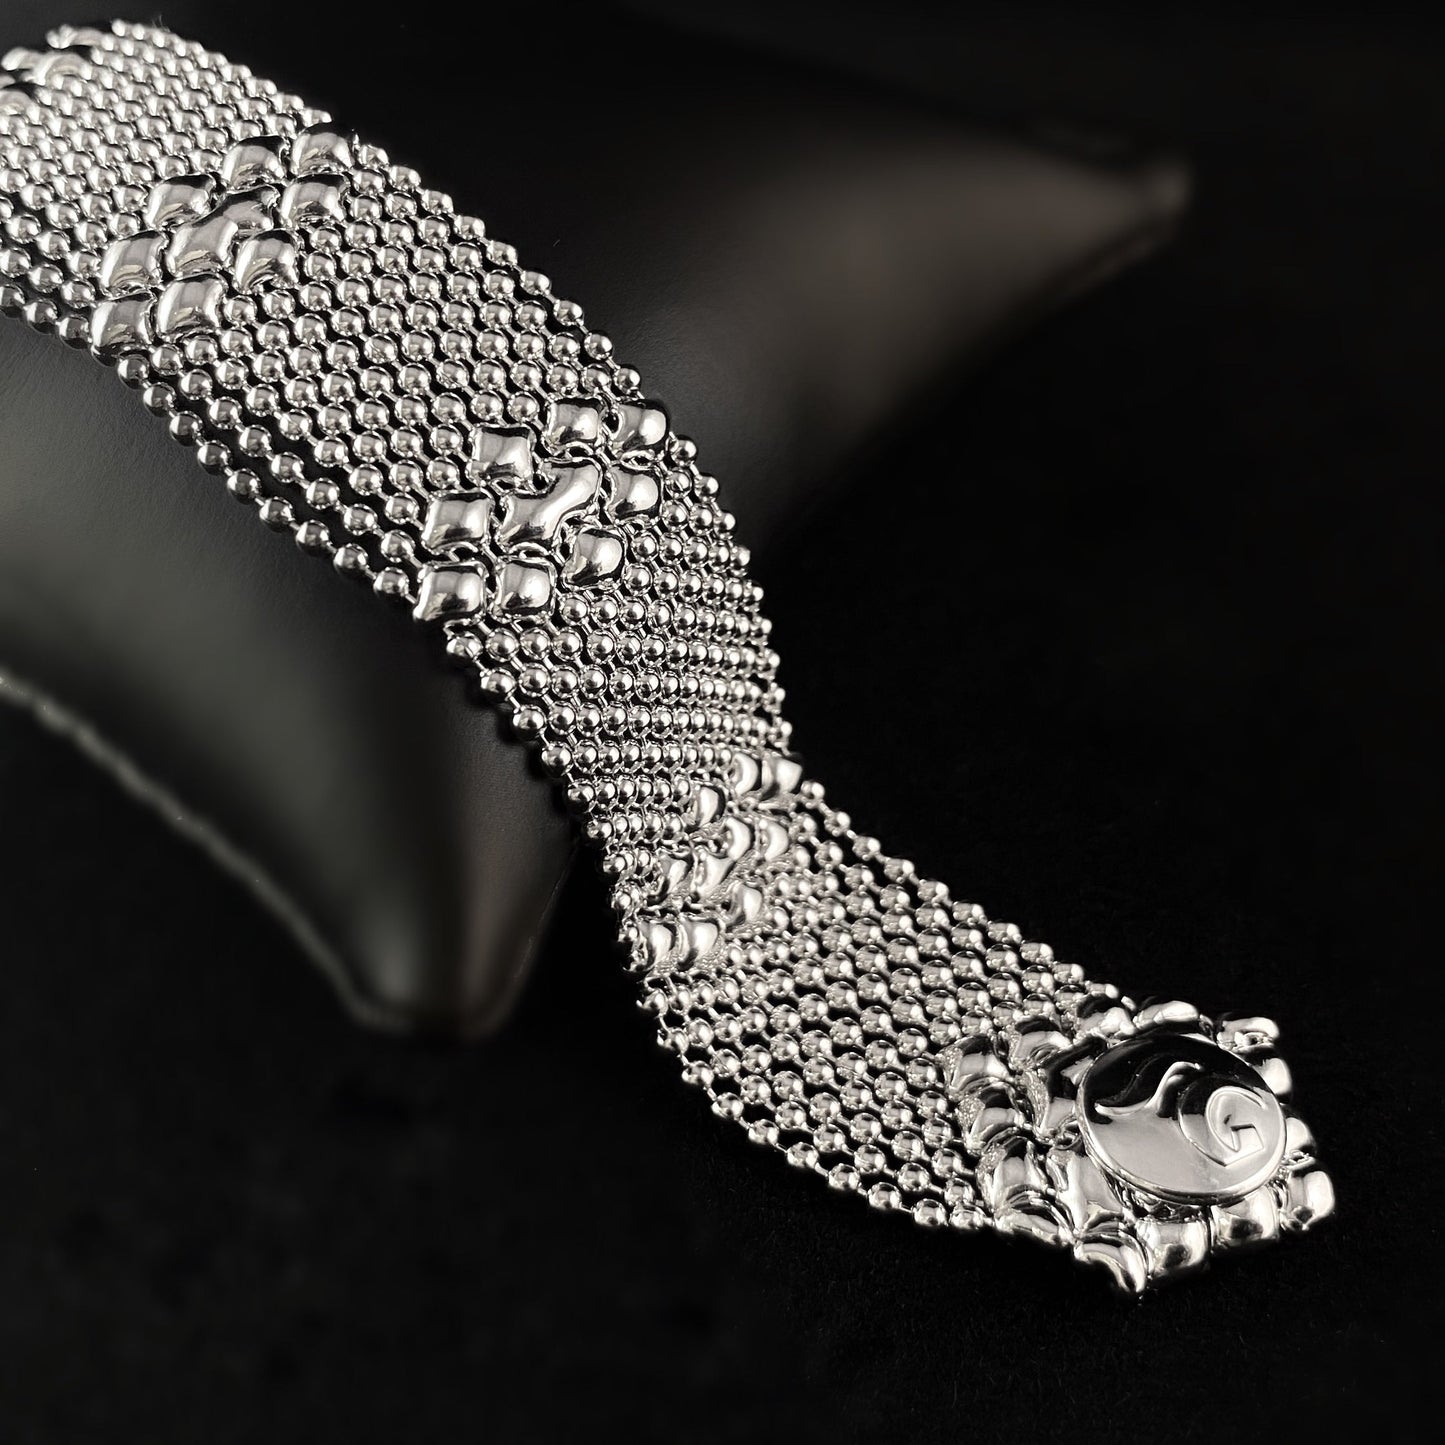 SG Liquid Metal Bracelet - 1 inch Wide Silver